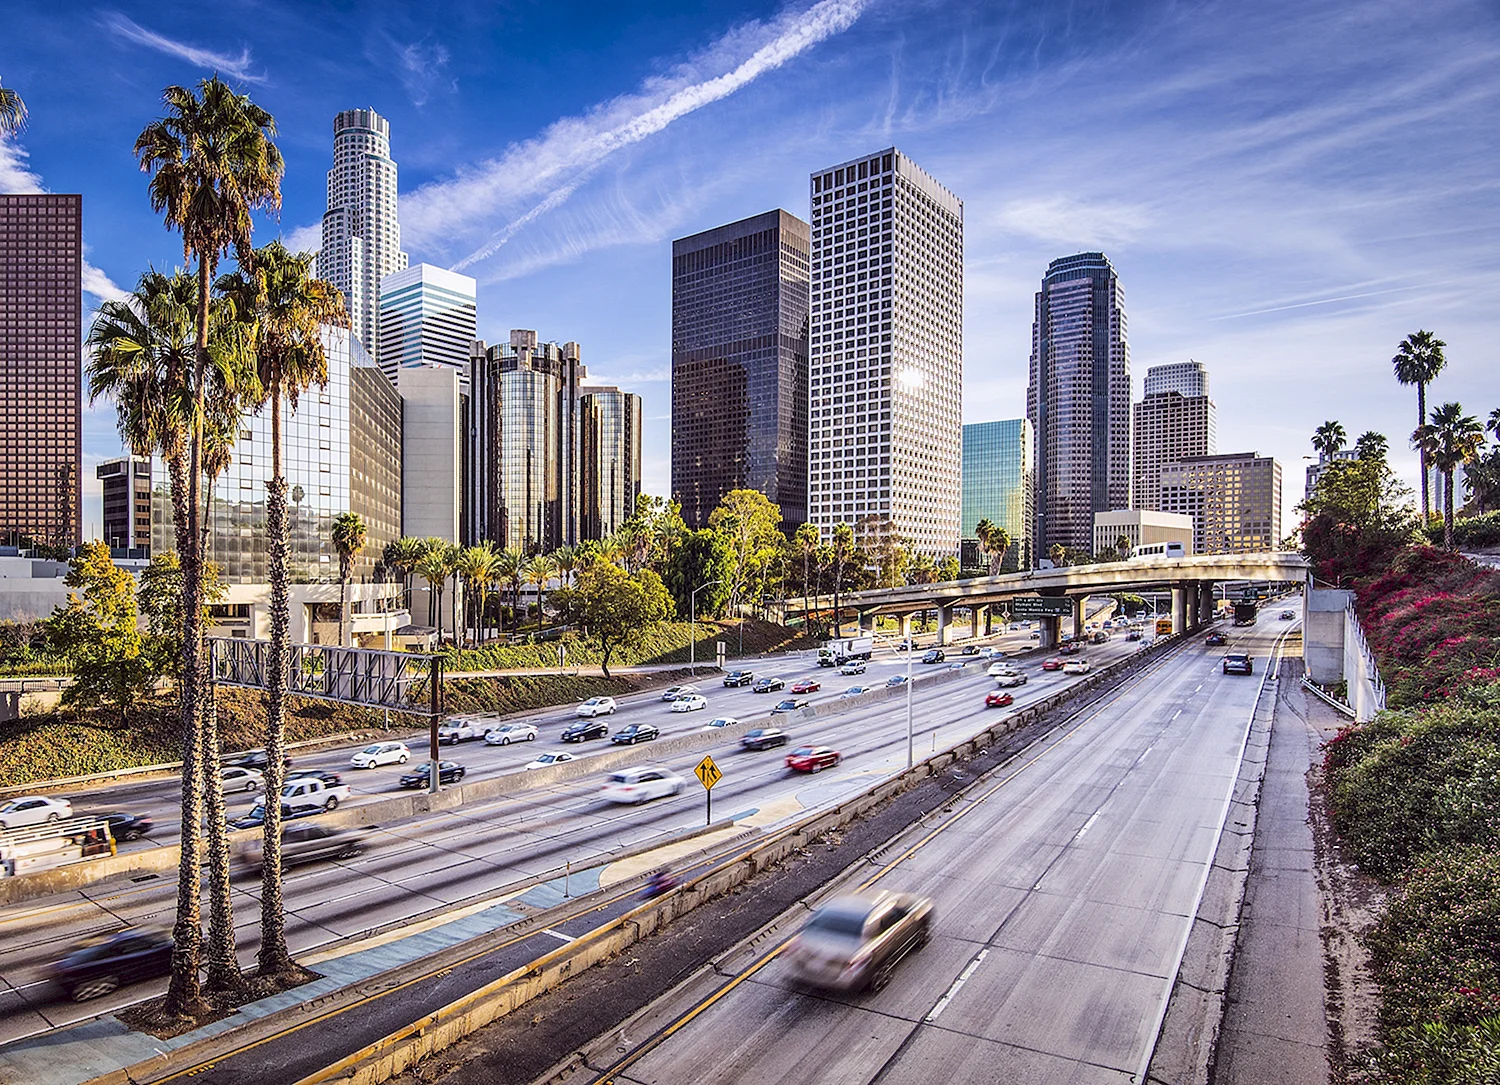 Даунтаун Лос Анджелес 2020